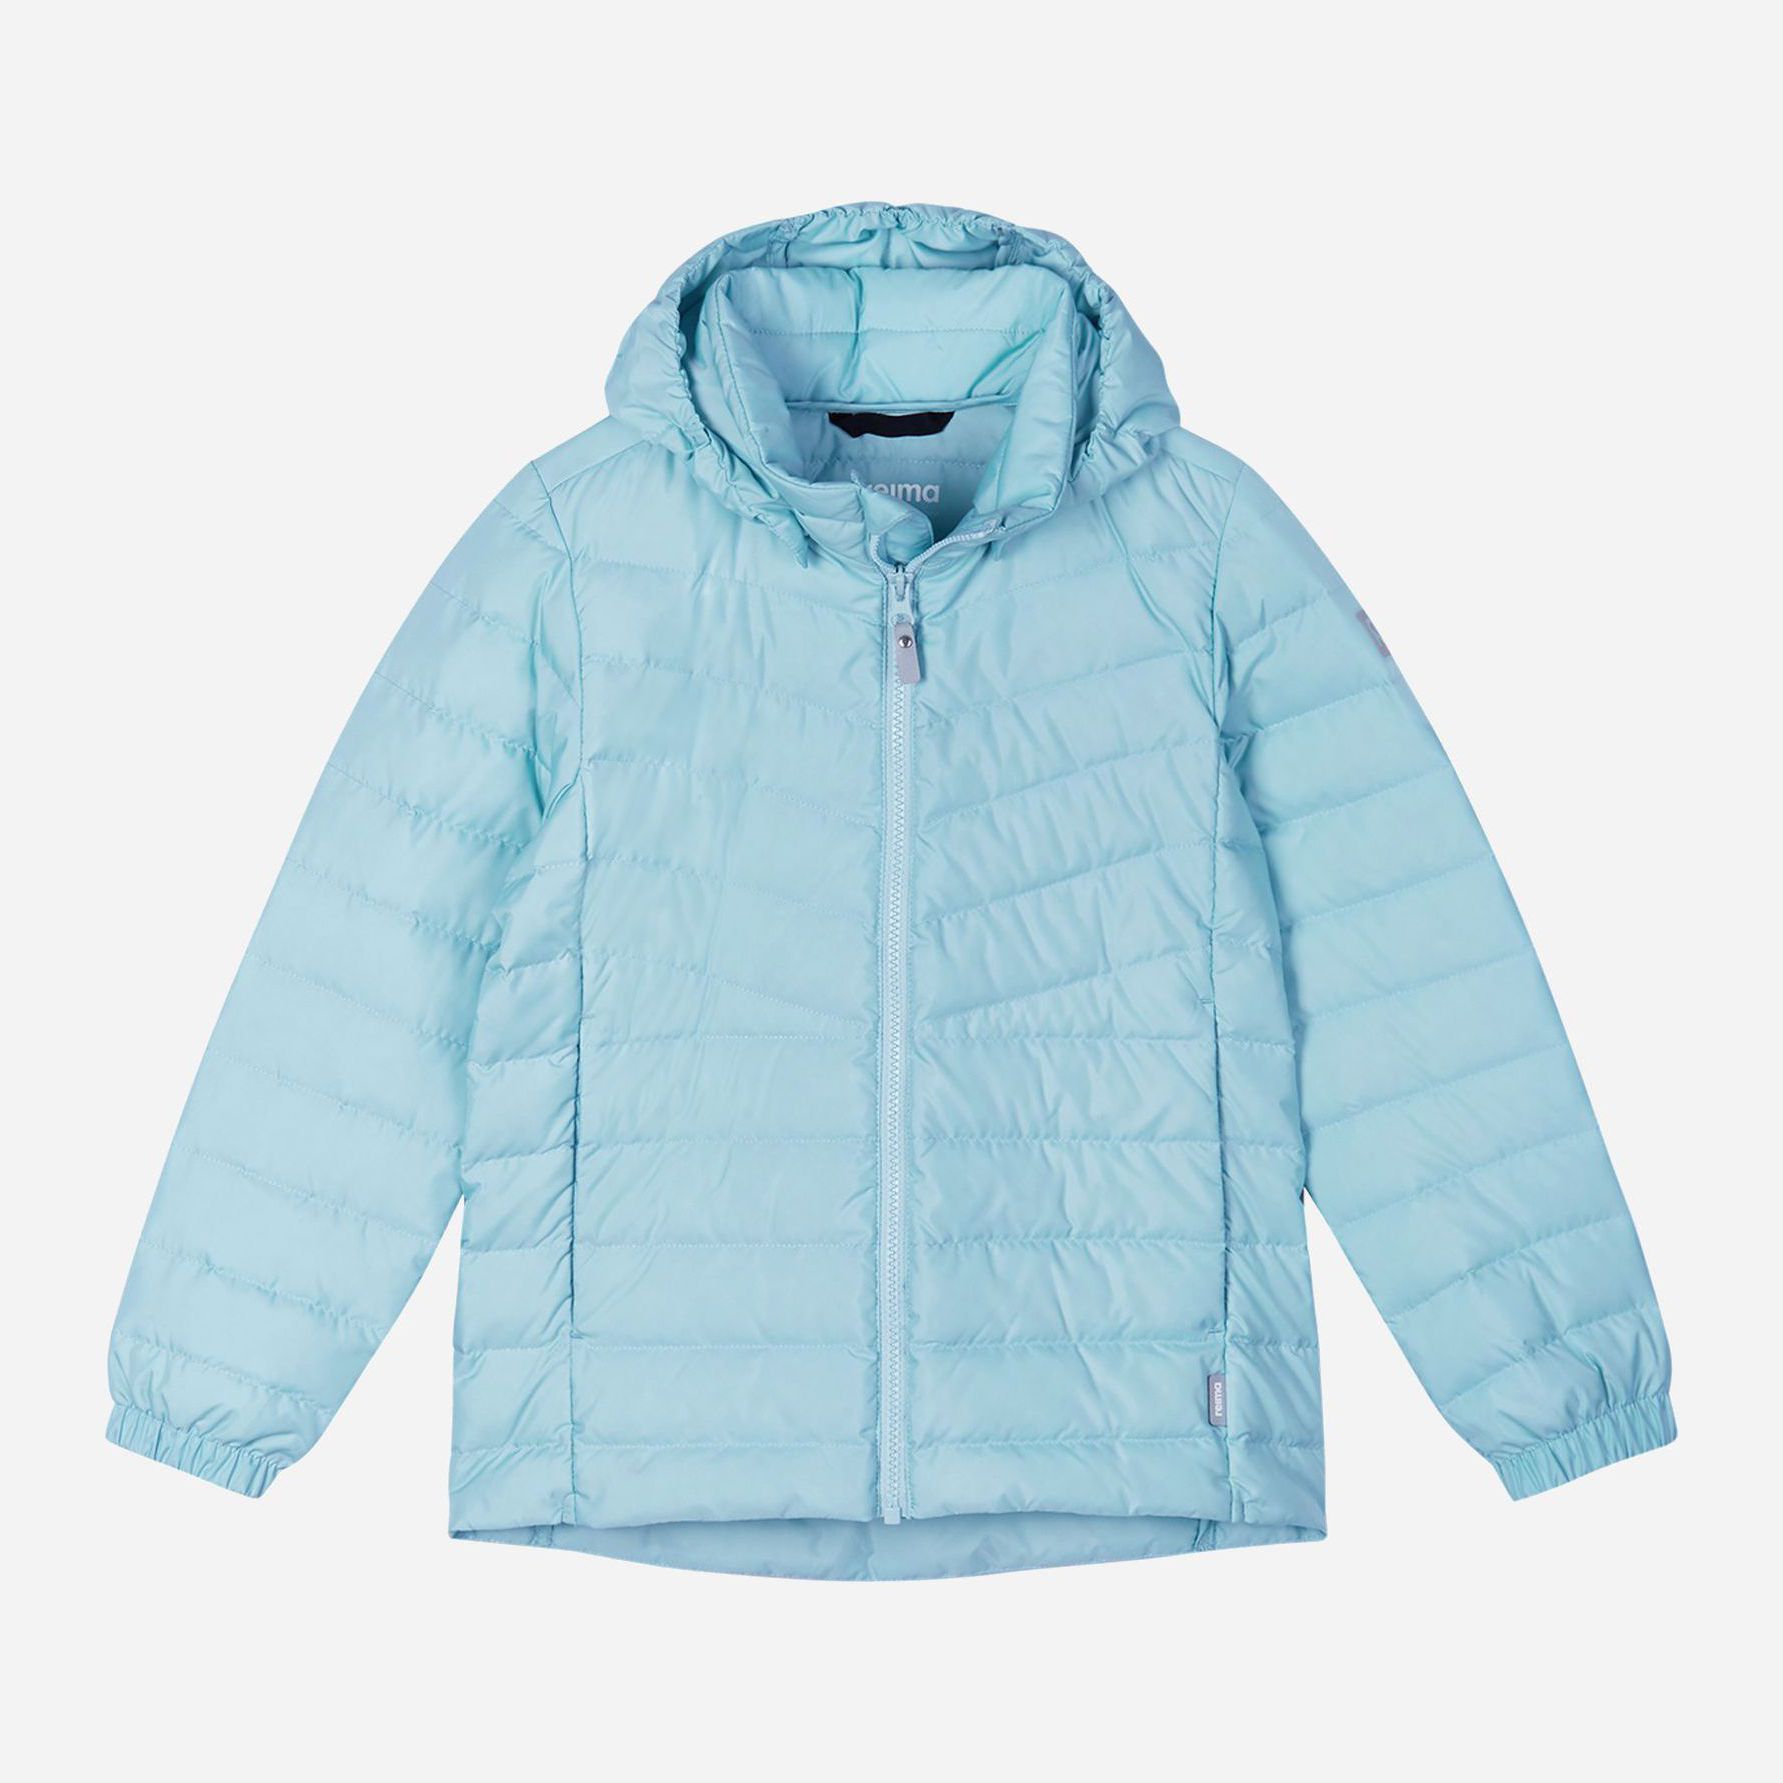 Акция на Дитяча демісезонна термо куртка для дівчинки Reima Fern 531476-6030 116 см от Rozetka